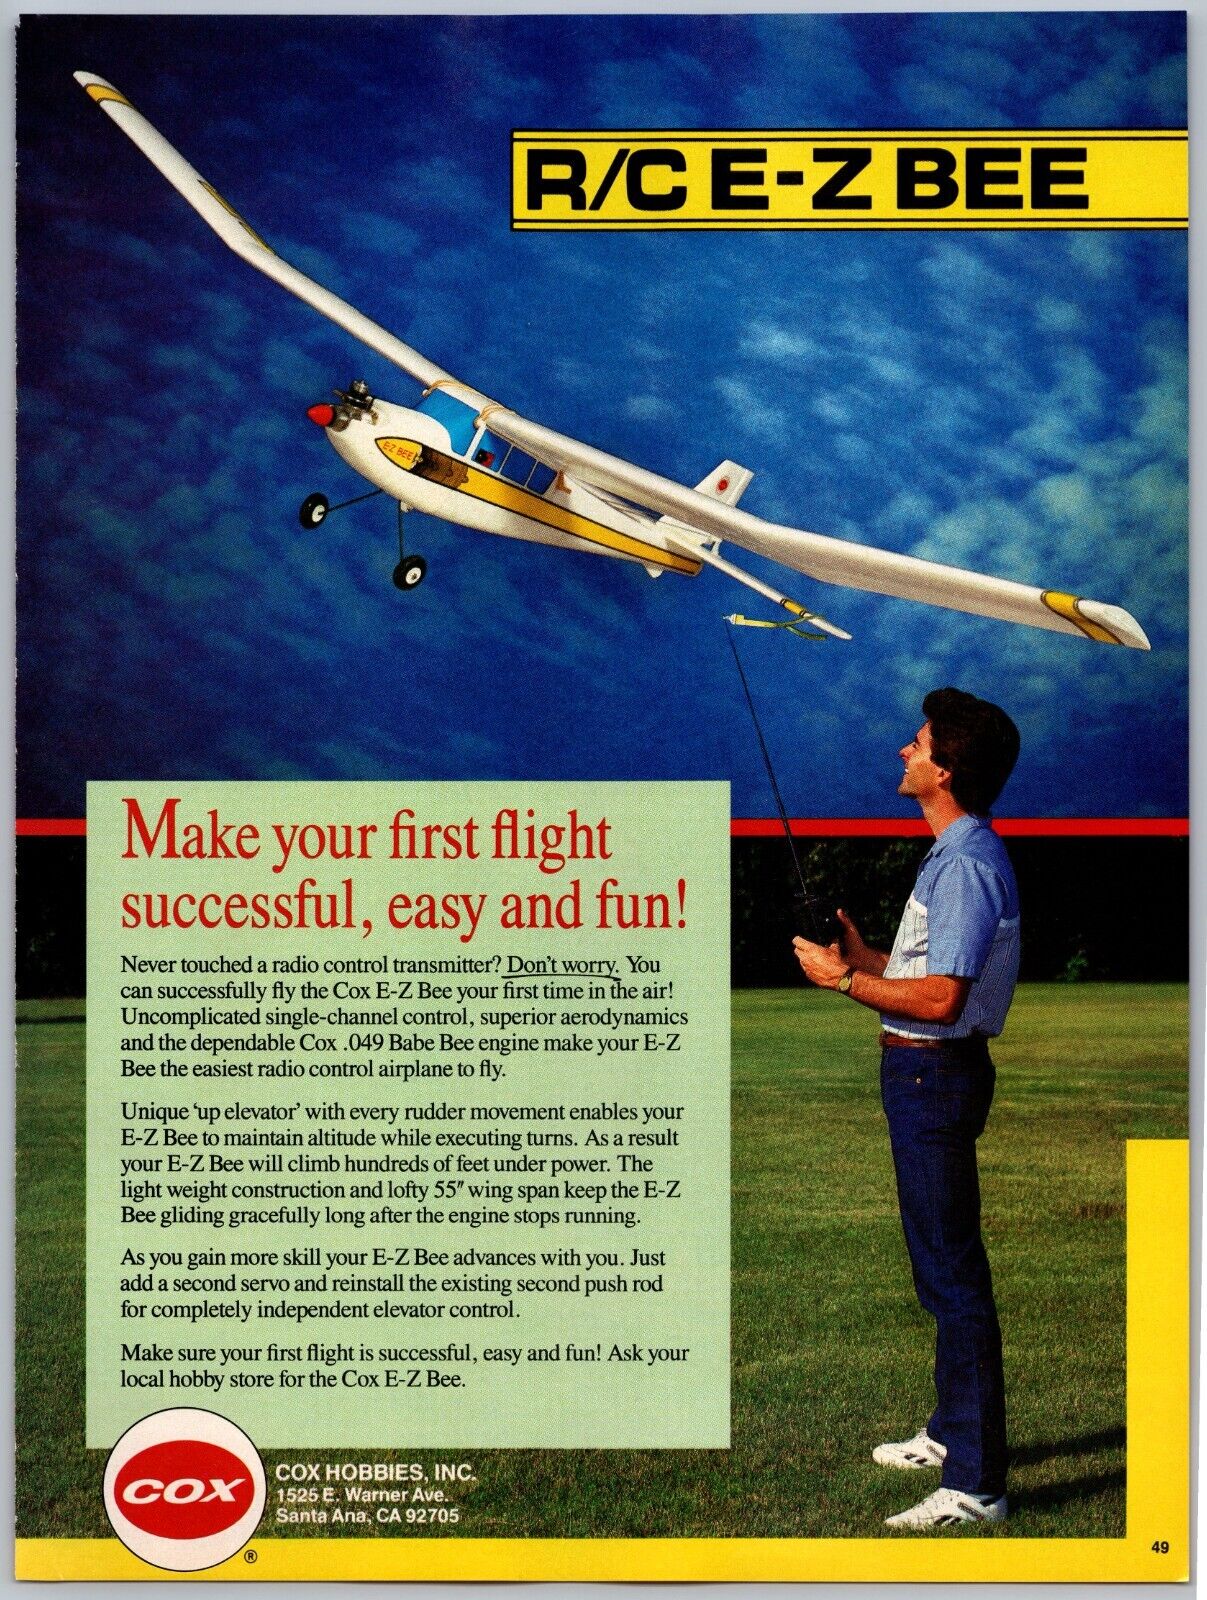 Cox Hobbies Inc. R/C E-Z Bee Model Airplane Vintage Dec, 1987 Full Page Print Ad